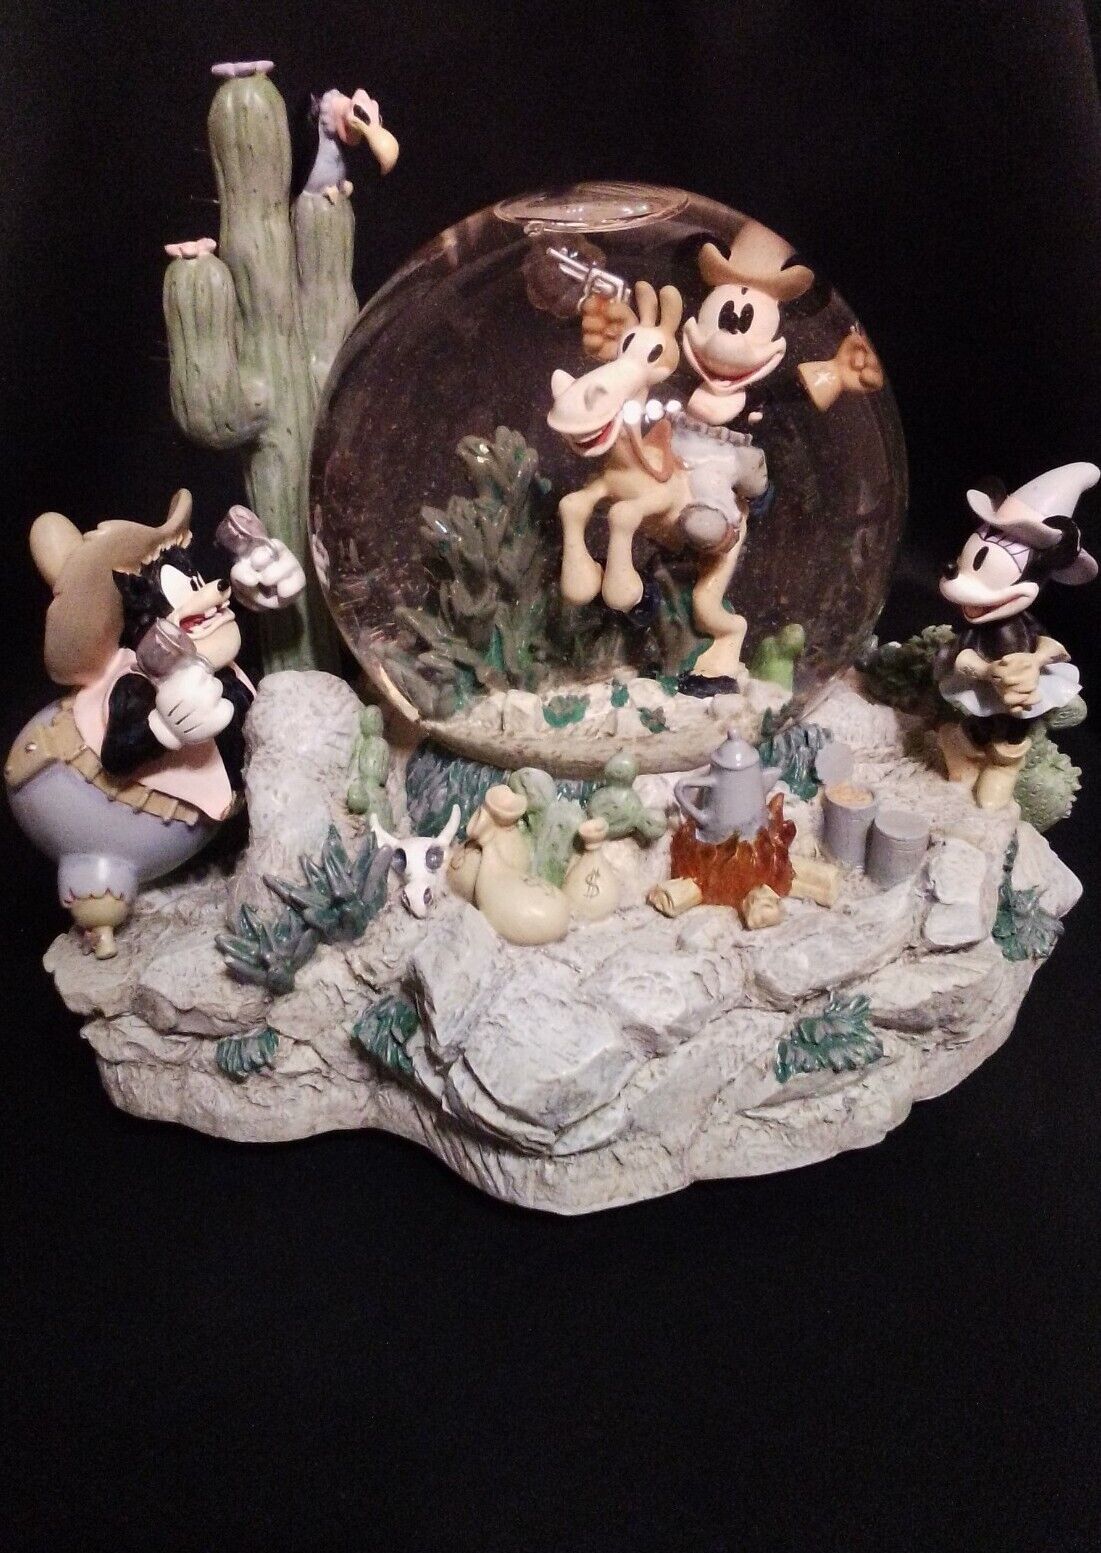 Rare - Disney Mickey Home On The Range Snow Globe - Lights Up, Music, Animated